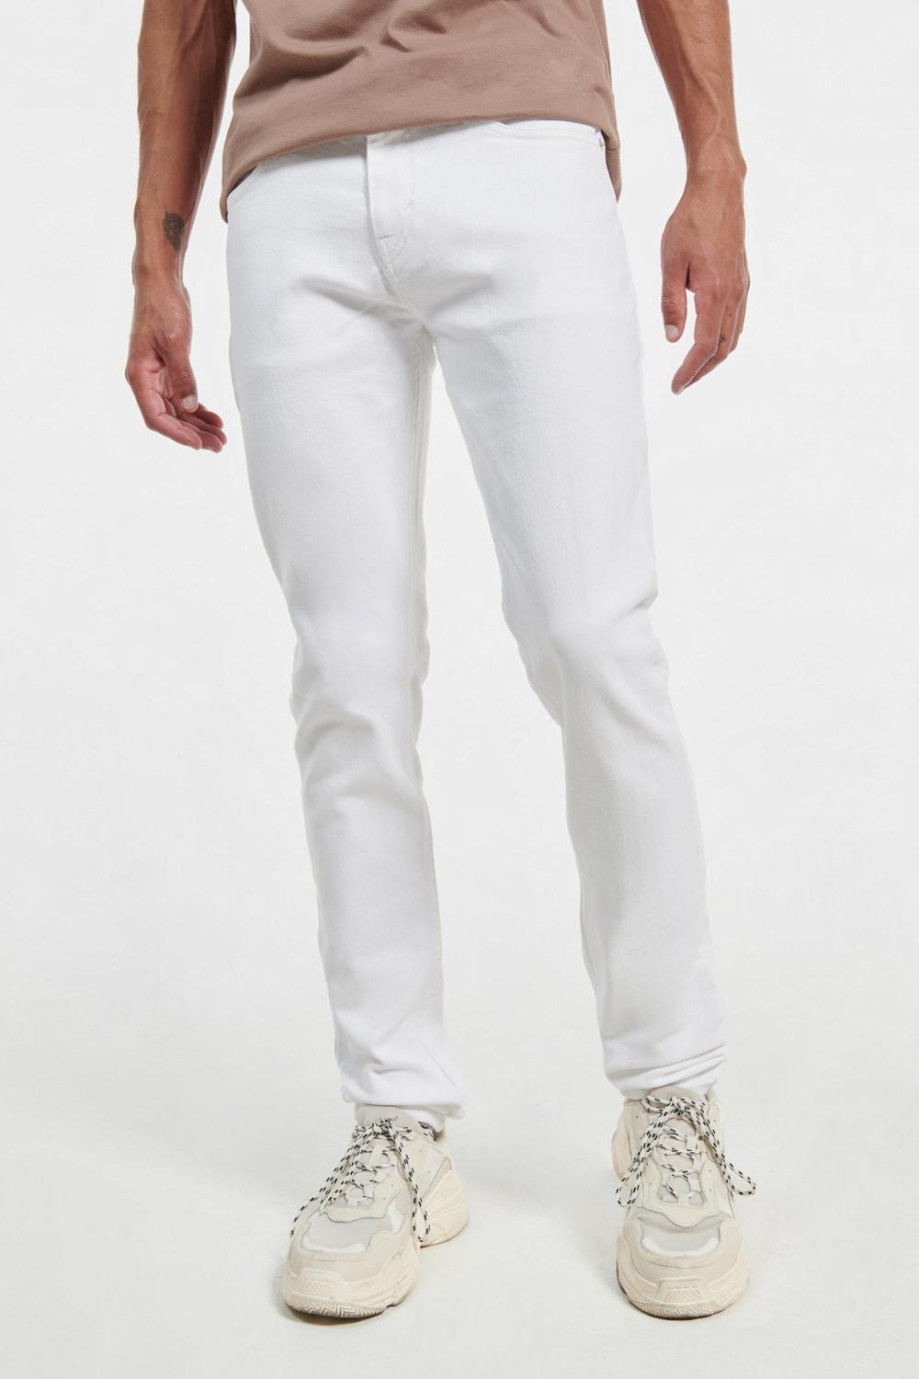 Jean blanco slim con ajuste ceñido, tiro bajo y 5 bolsillos